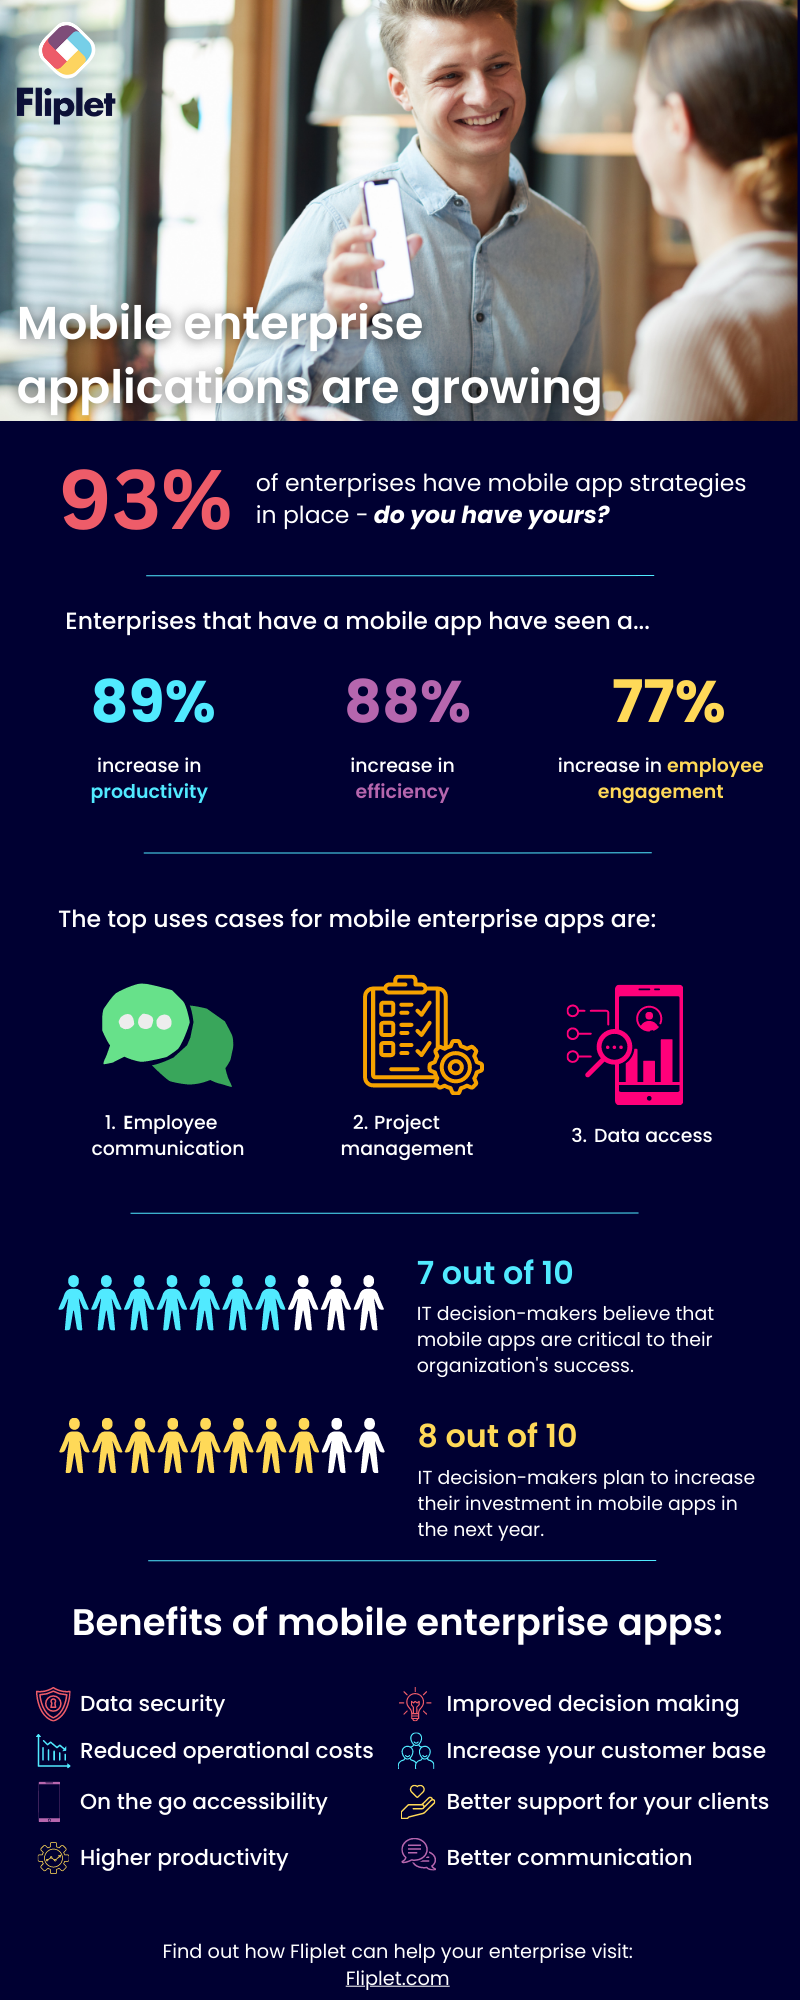 enterprise mobile apps